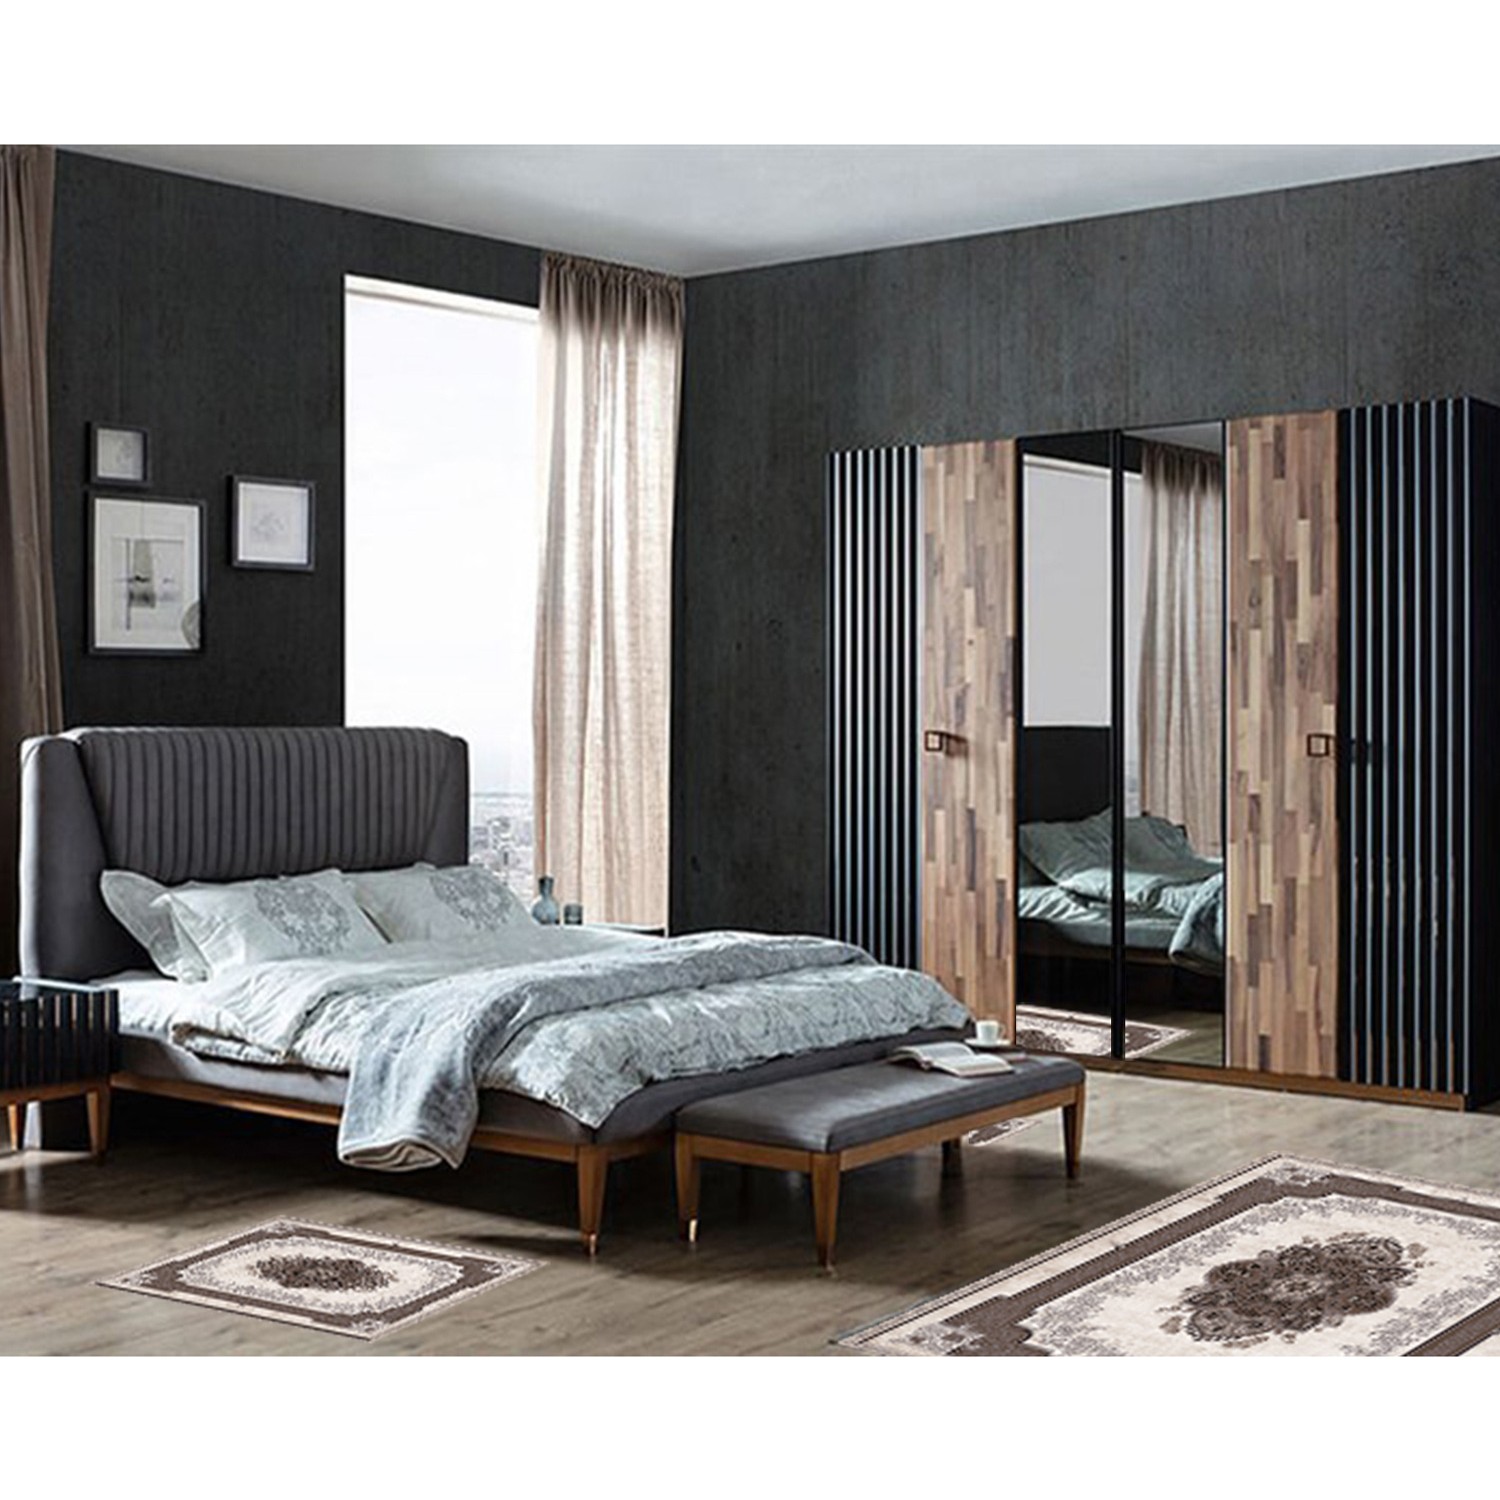 Alanur Almira Yatak Odası Halısı 3�lü Set 80 x 150 cm + 2 Fiyatı